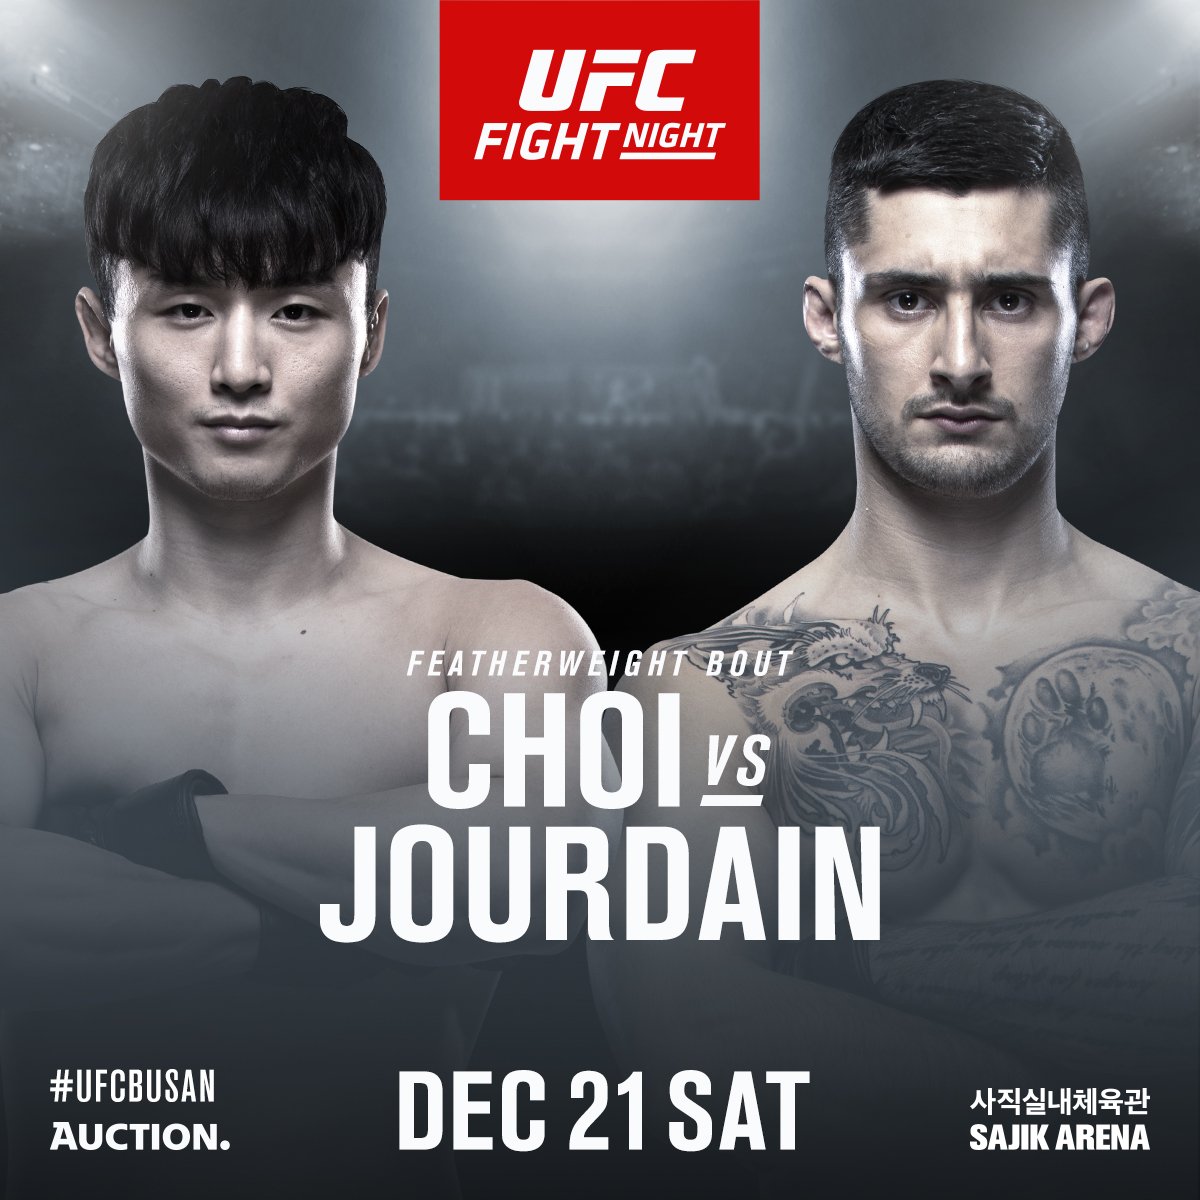 UFC on ESPN+ 23 - Busan - Poster et affiche